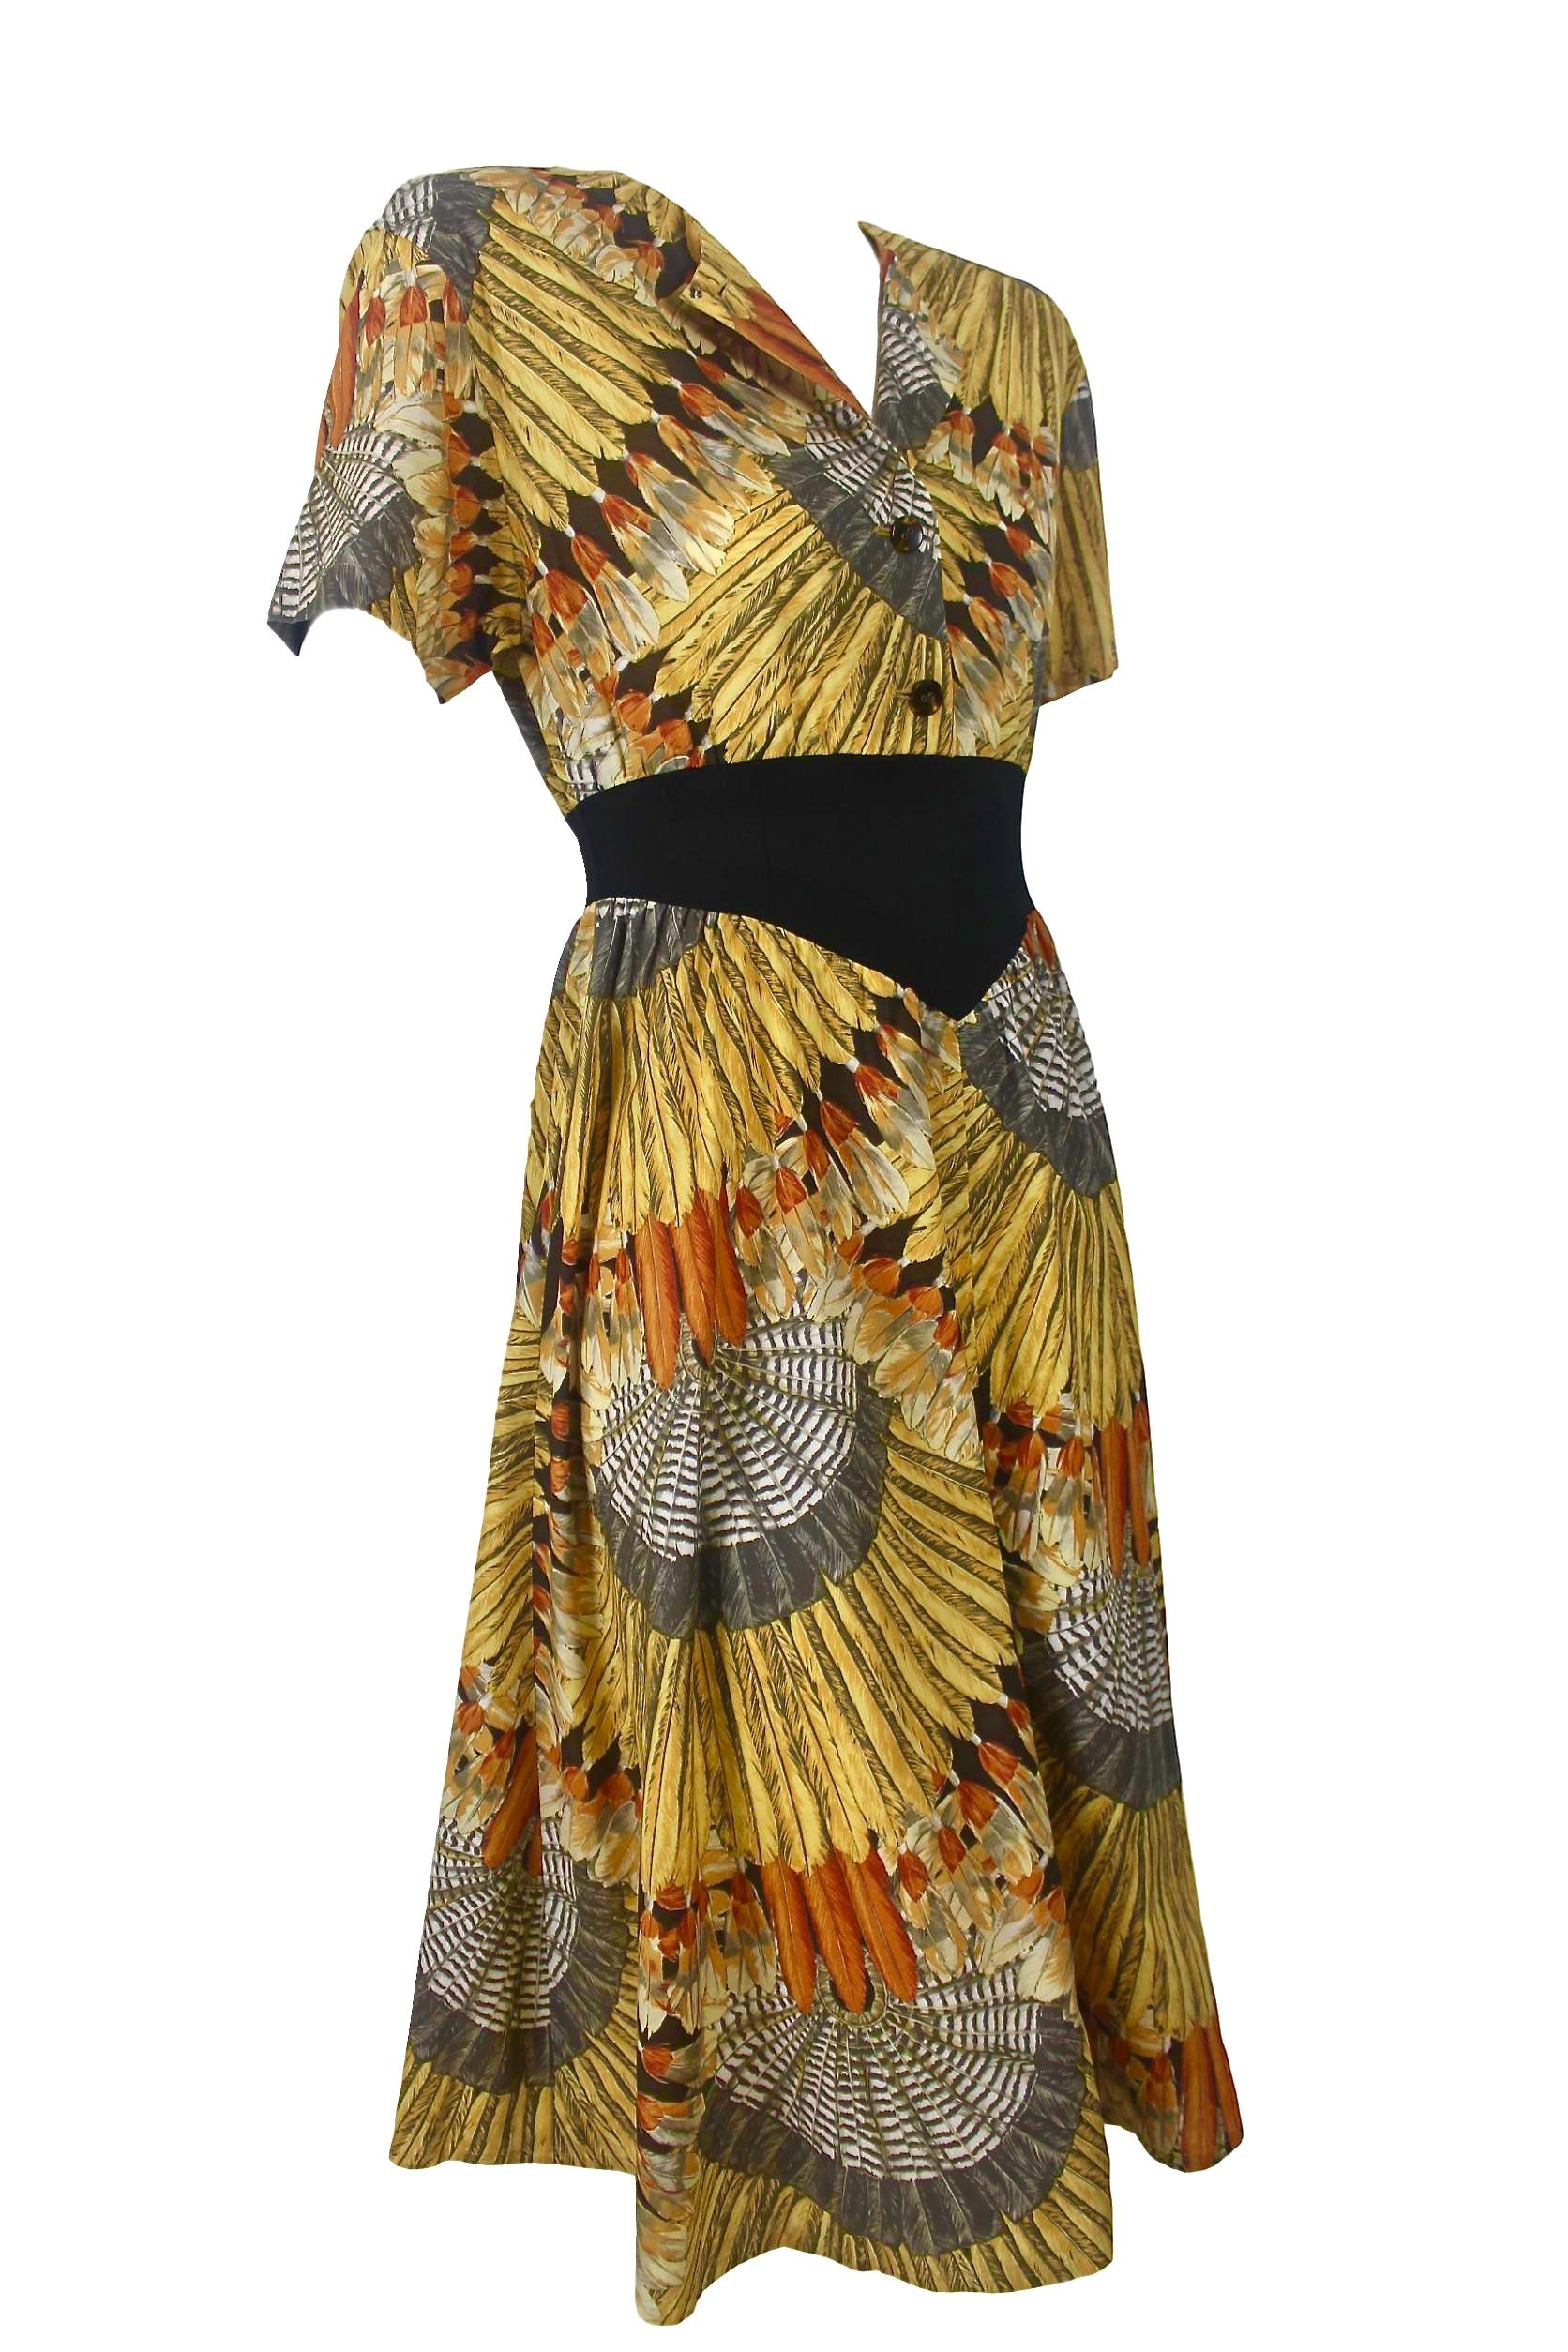 Sorelle Fontana Feather Print Dress For Sale 5